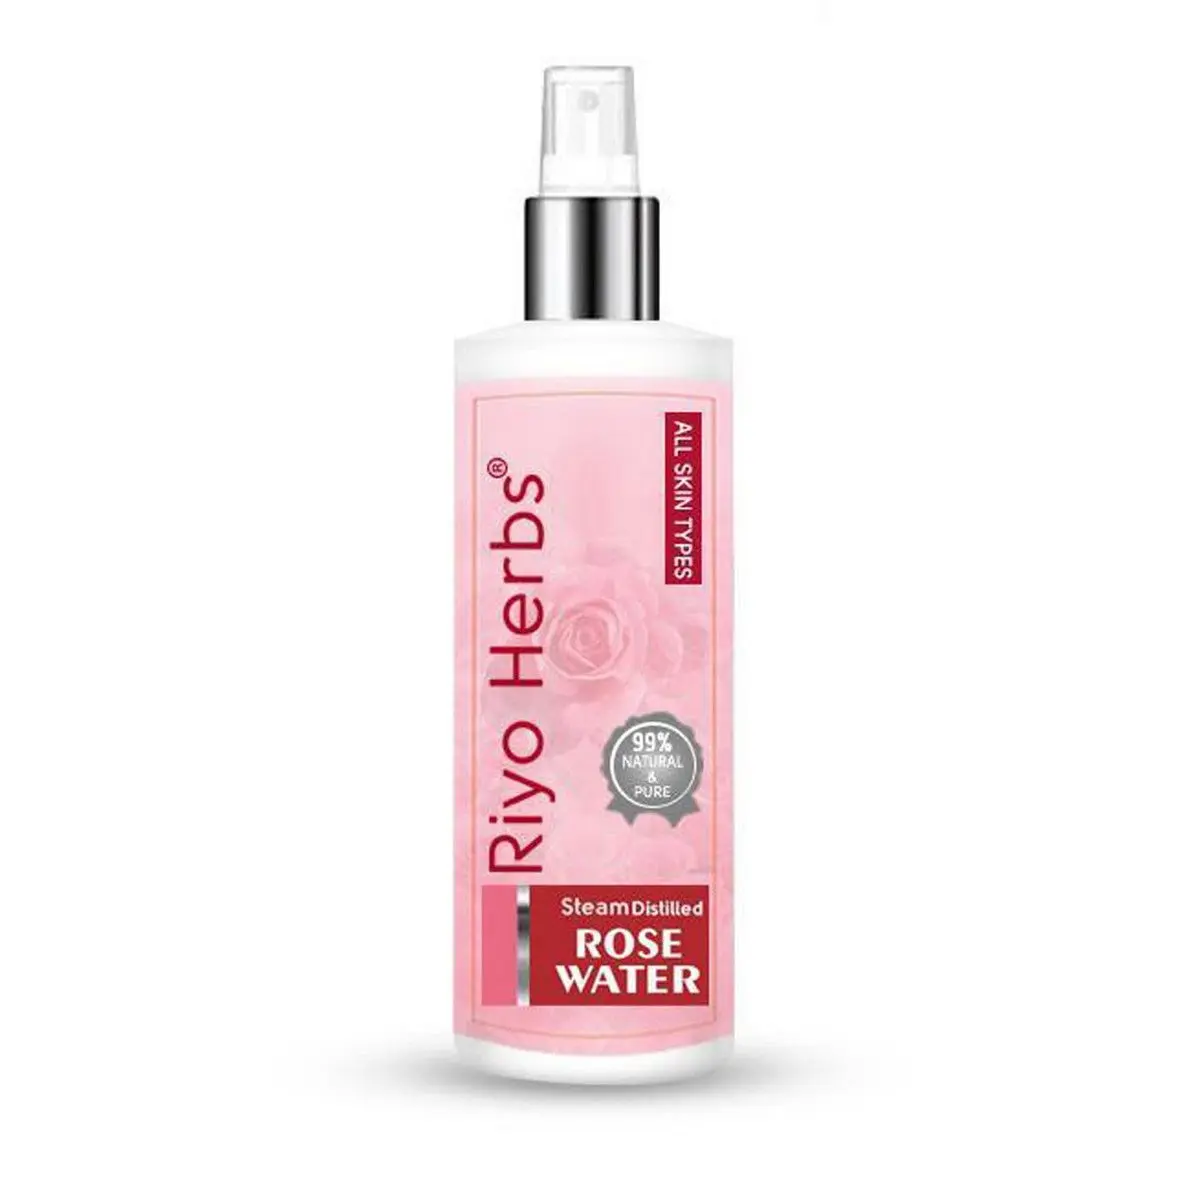 Riyo Herbs Steam Distilled Rose Water Spray for Face, All Skin Types Women & Men - 200ml